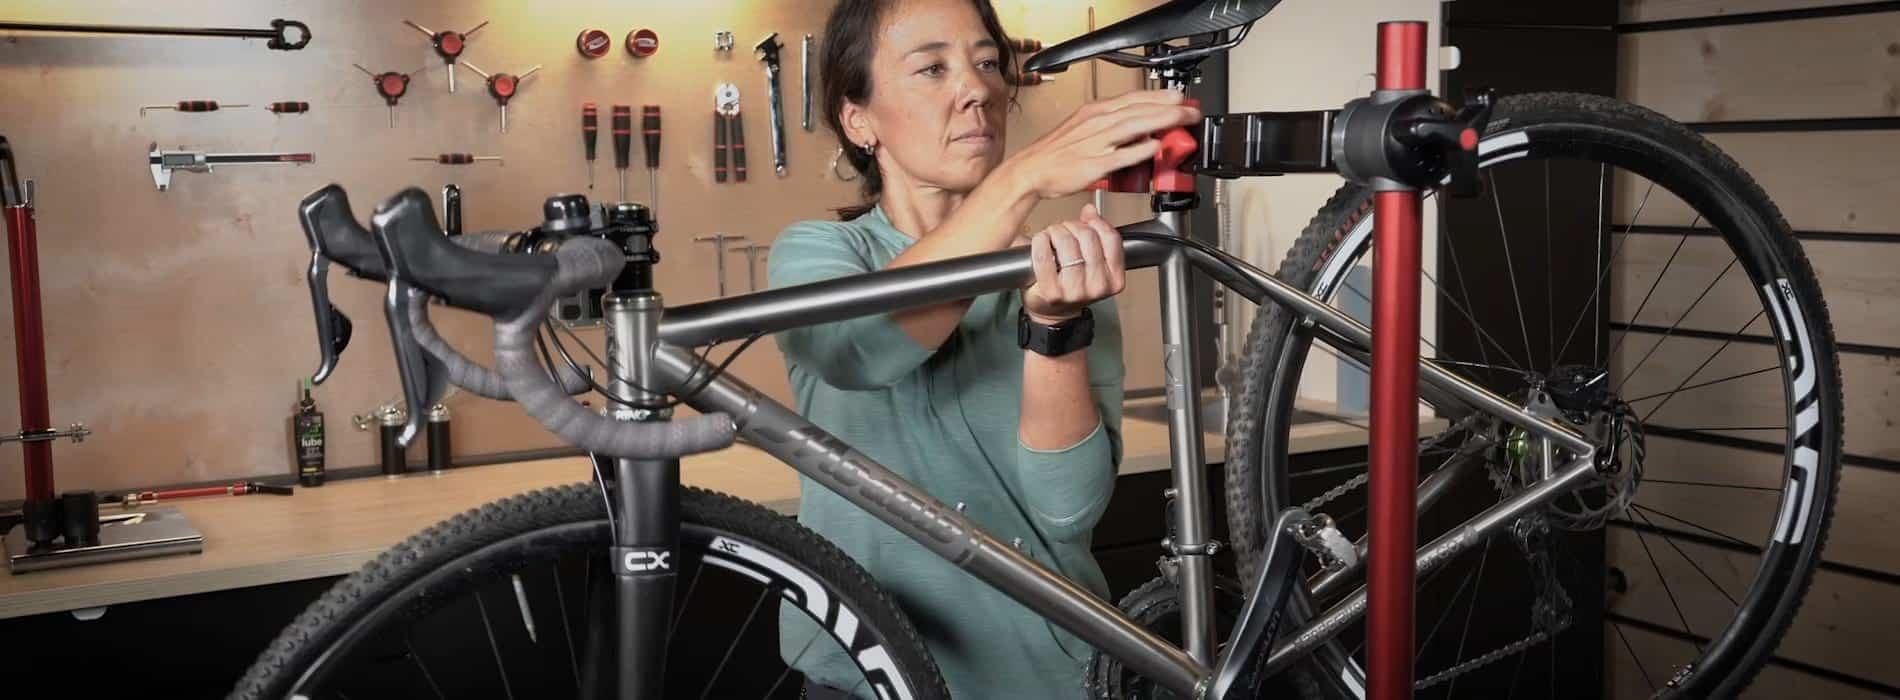 Woman fixing bicycle in a bike shop.